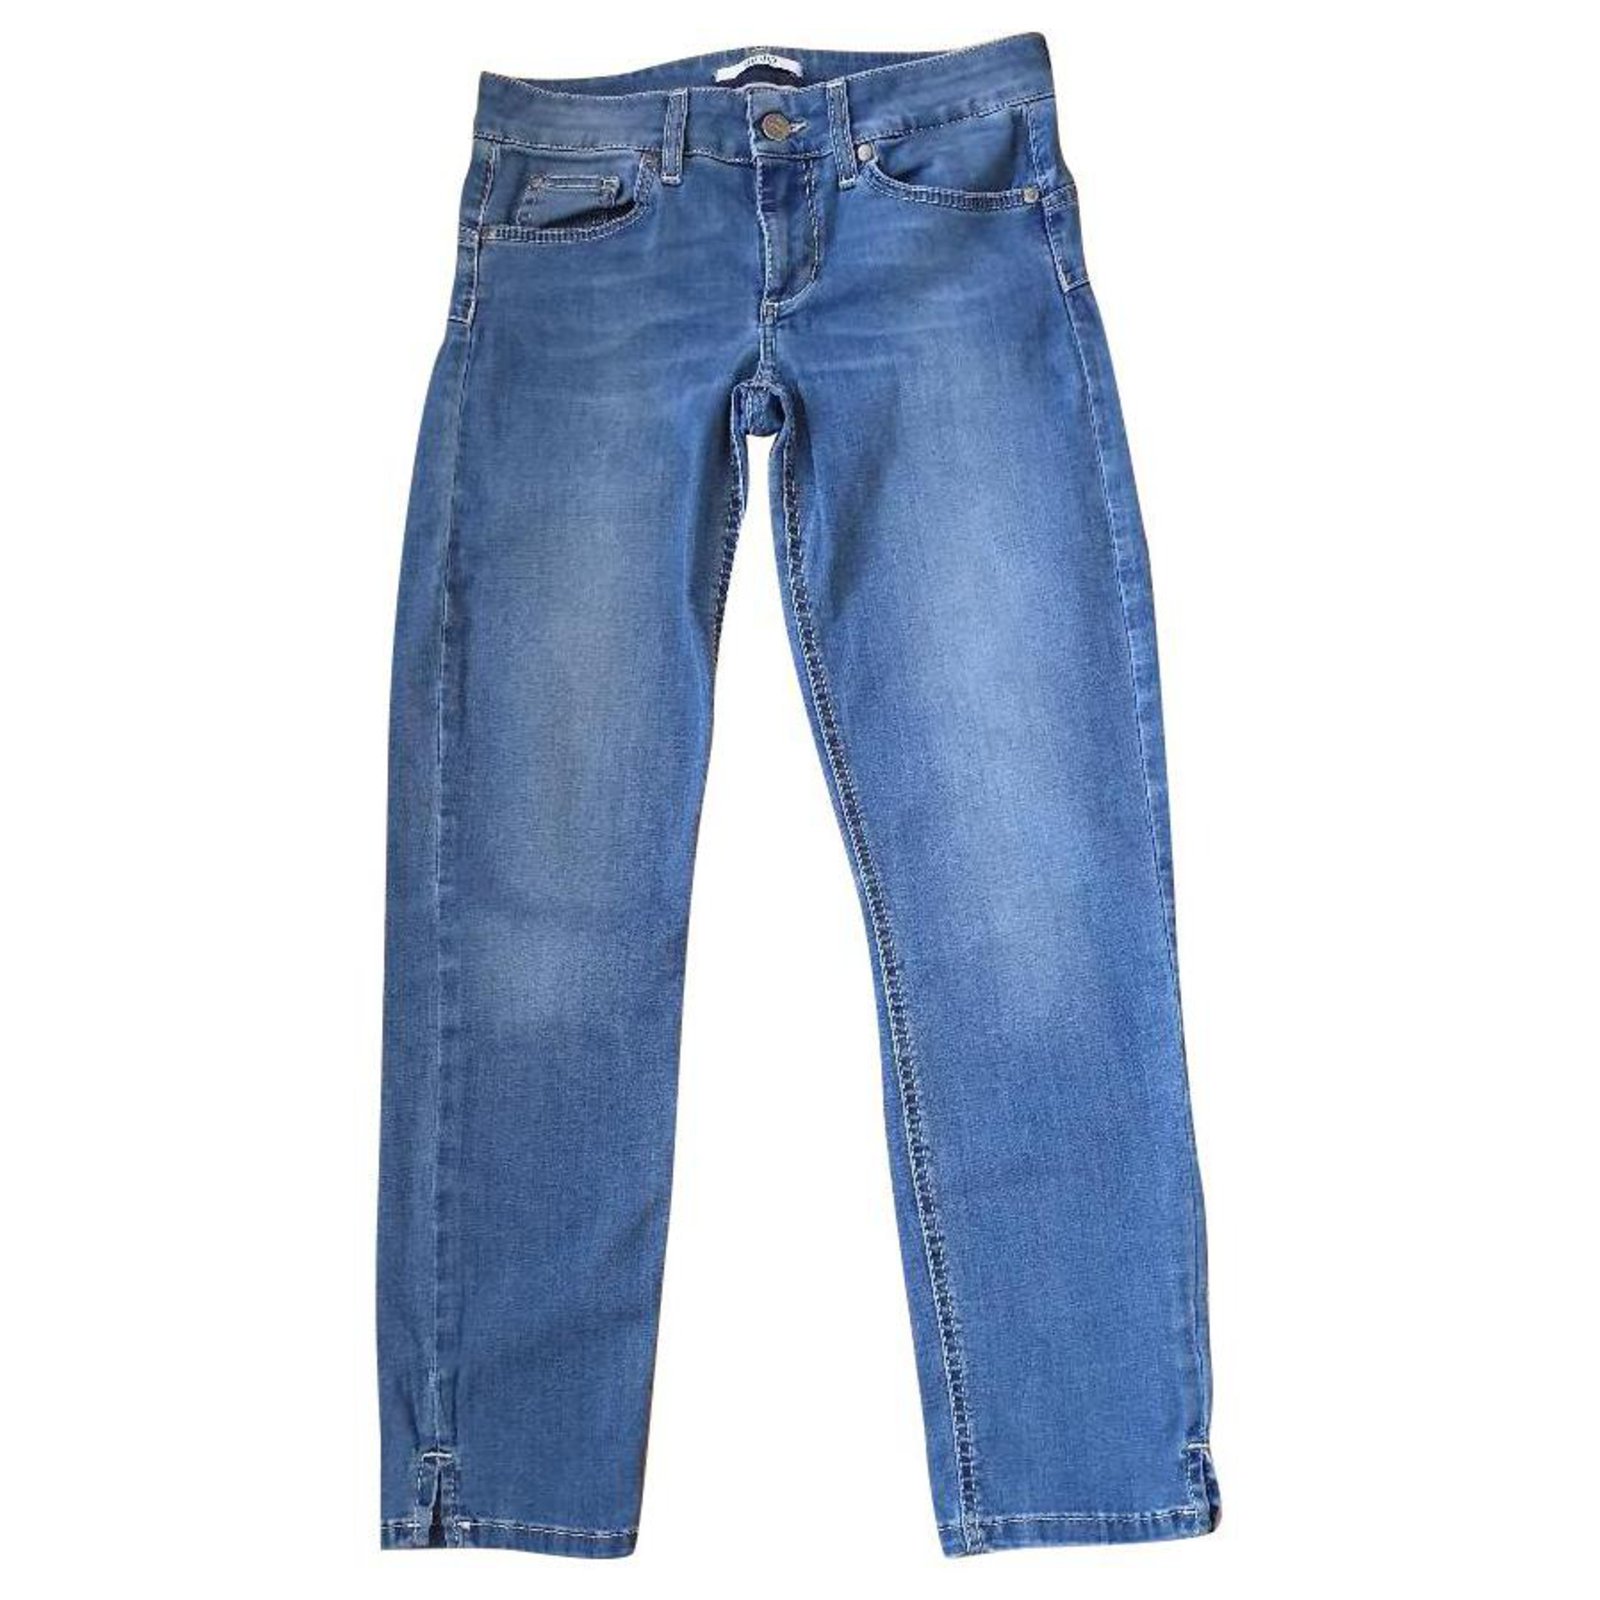 Femme Vêtements Jeans Jeans skinny Pantalon Coton Liu Jo en coloris Bleu 